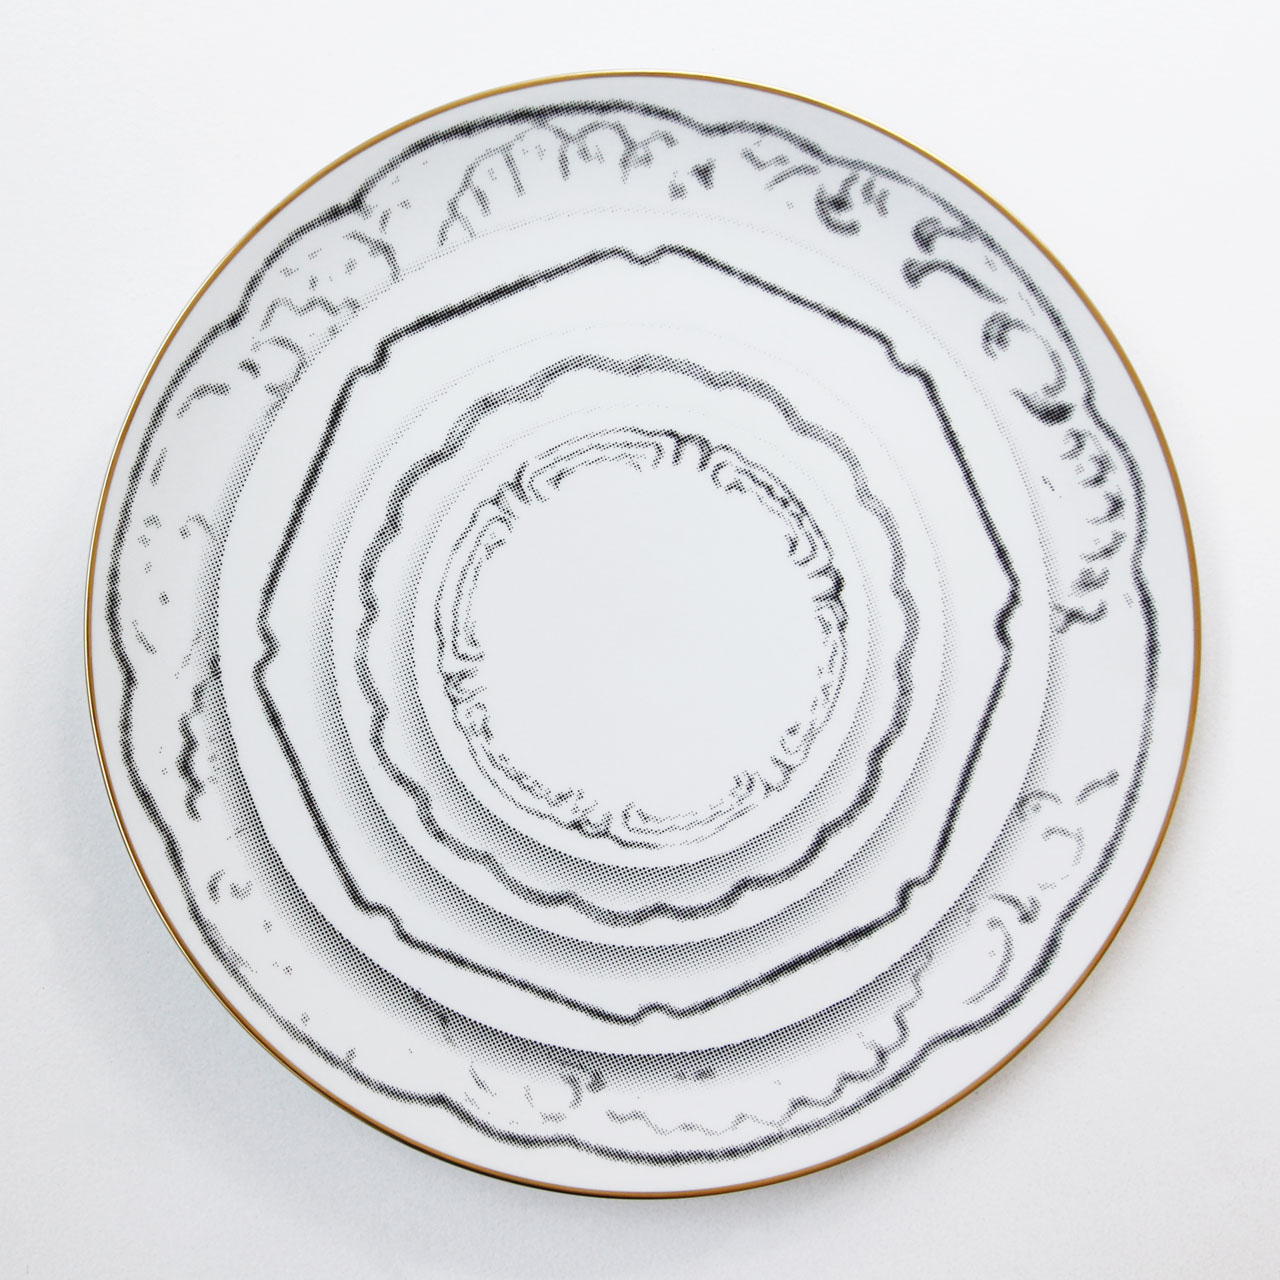 Tracés serving plate by Sam Baron for Vista Alegre / porcelain with golden edge / 32cm D x 3.8 cm H / Edition of 30. Photo by Costas Voyatzis.